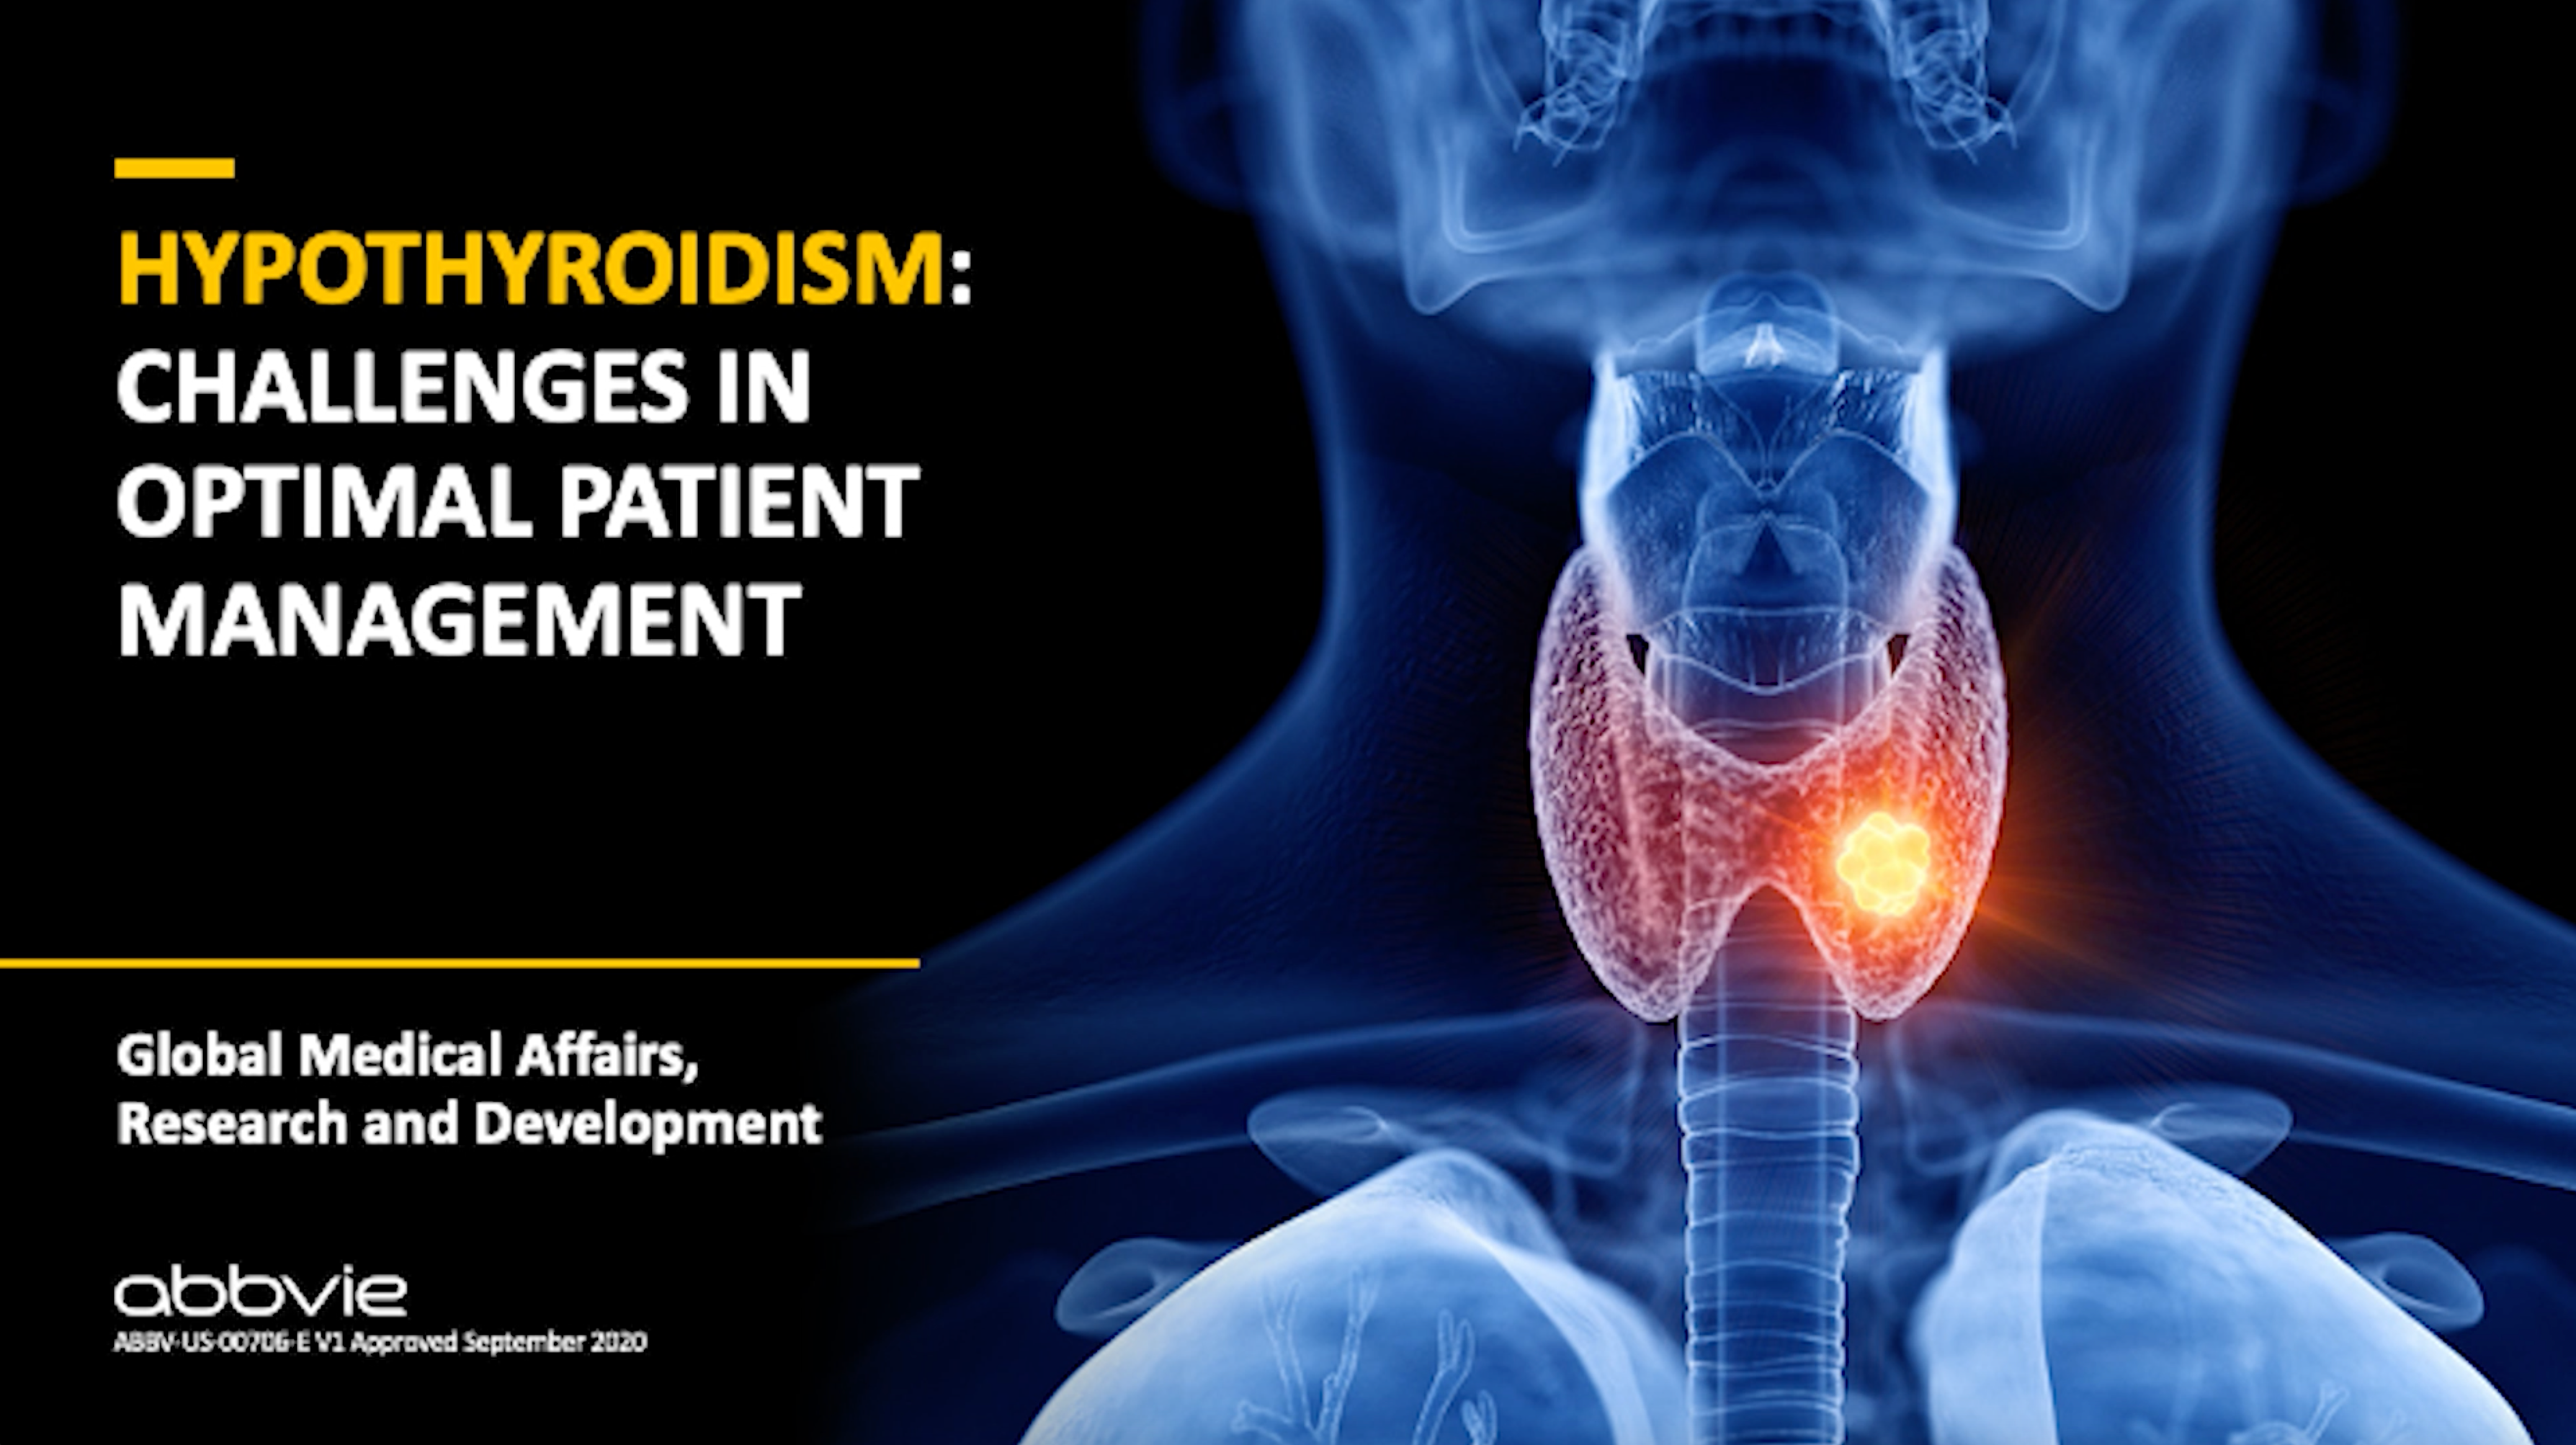 Hypothyroidism: Challenges in Optimal Patient Management